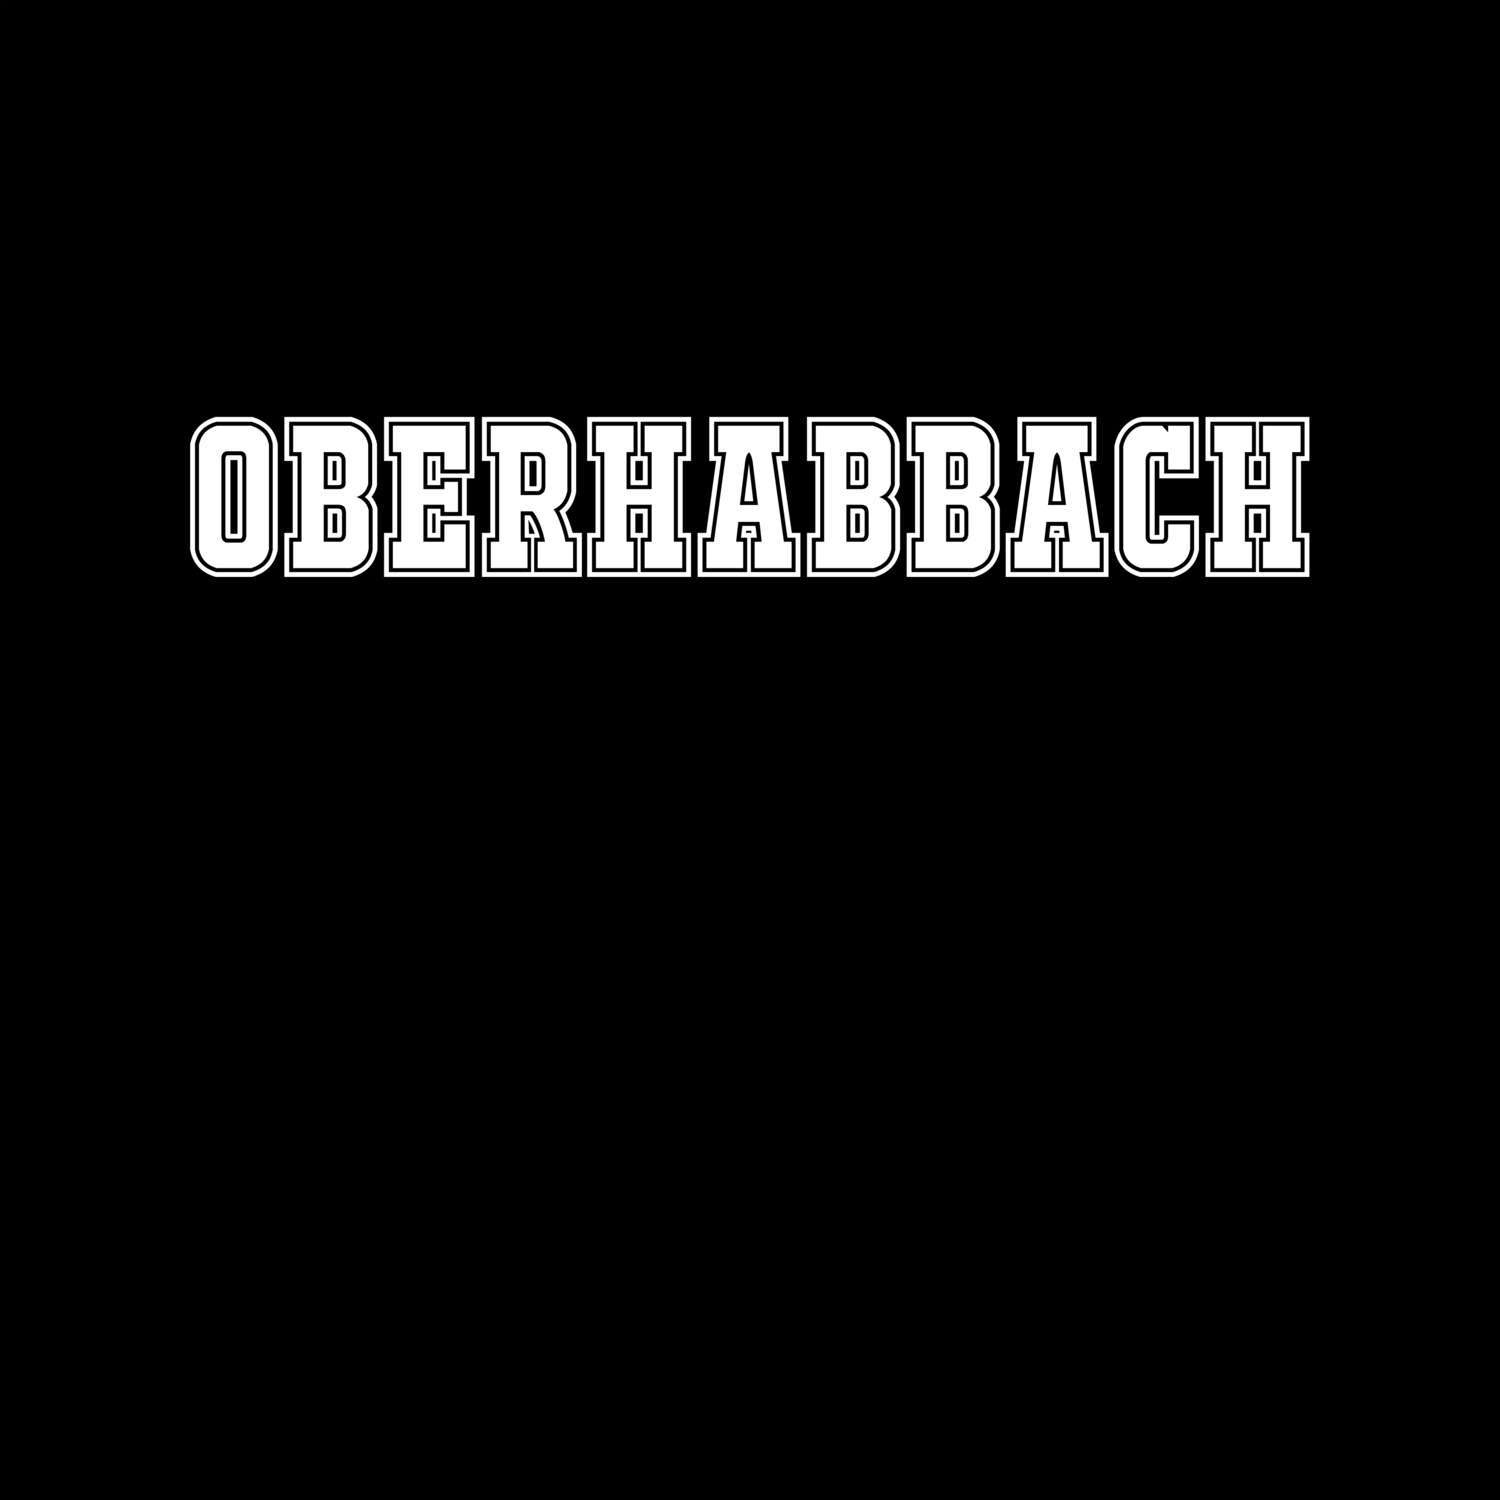 Oberhabbach T-Shirt »Classic«